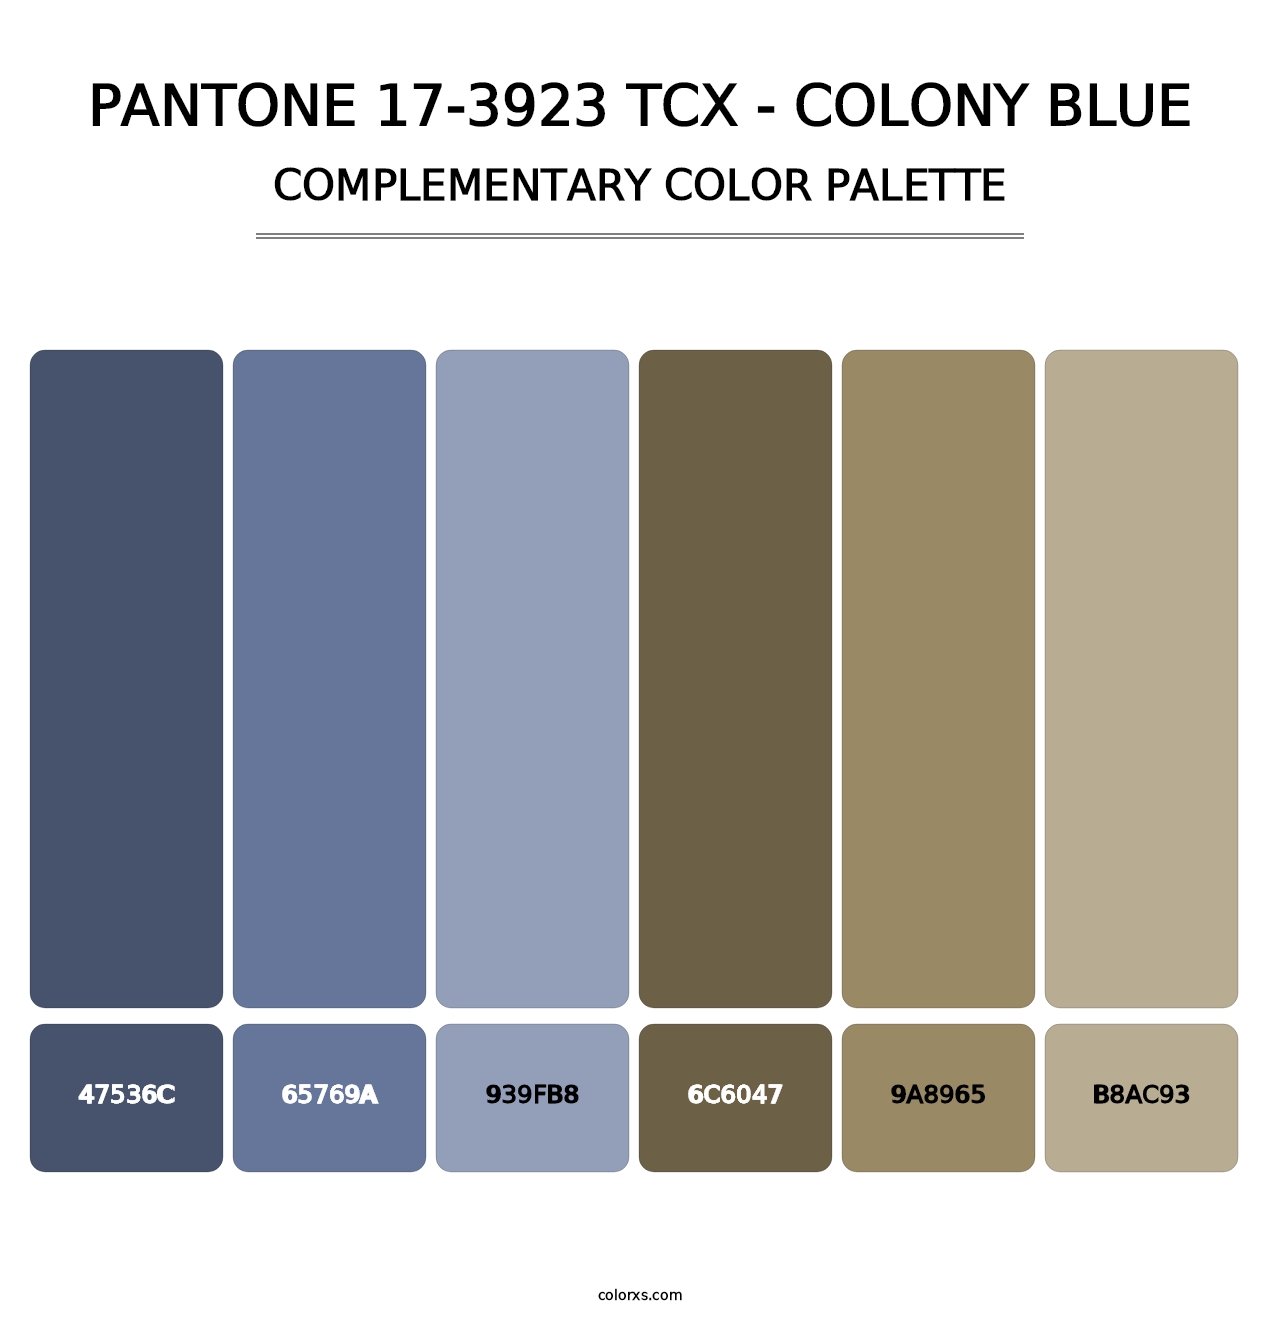 PANTONE 17-3923 TCX - Colony Blue - Complementary Color Palette